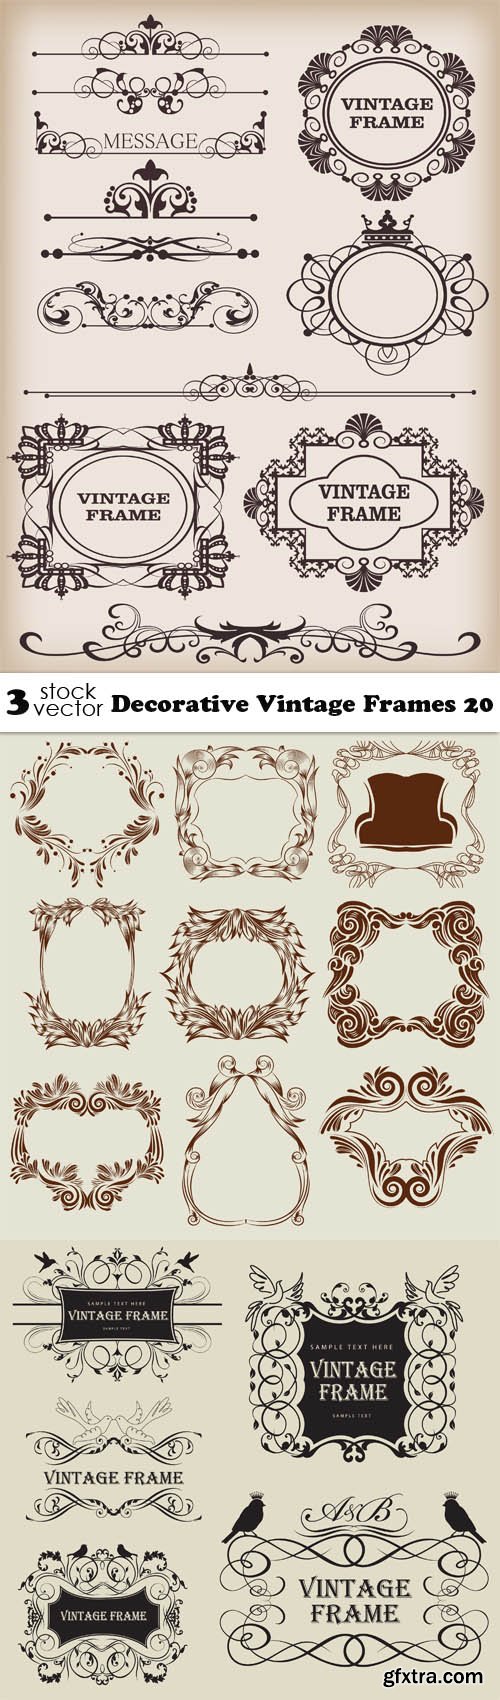 Vectors - Decorative Vintage Frames 20